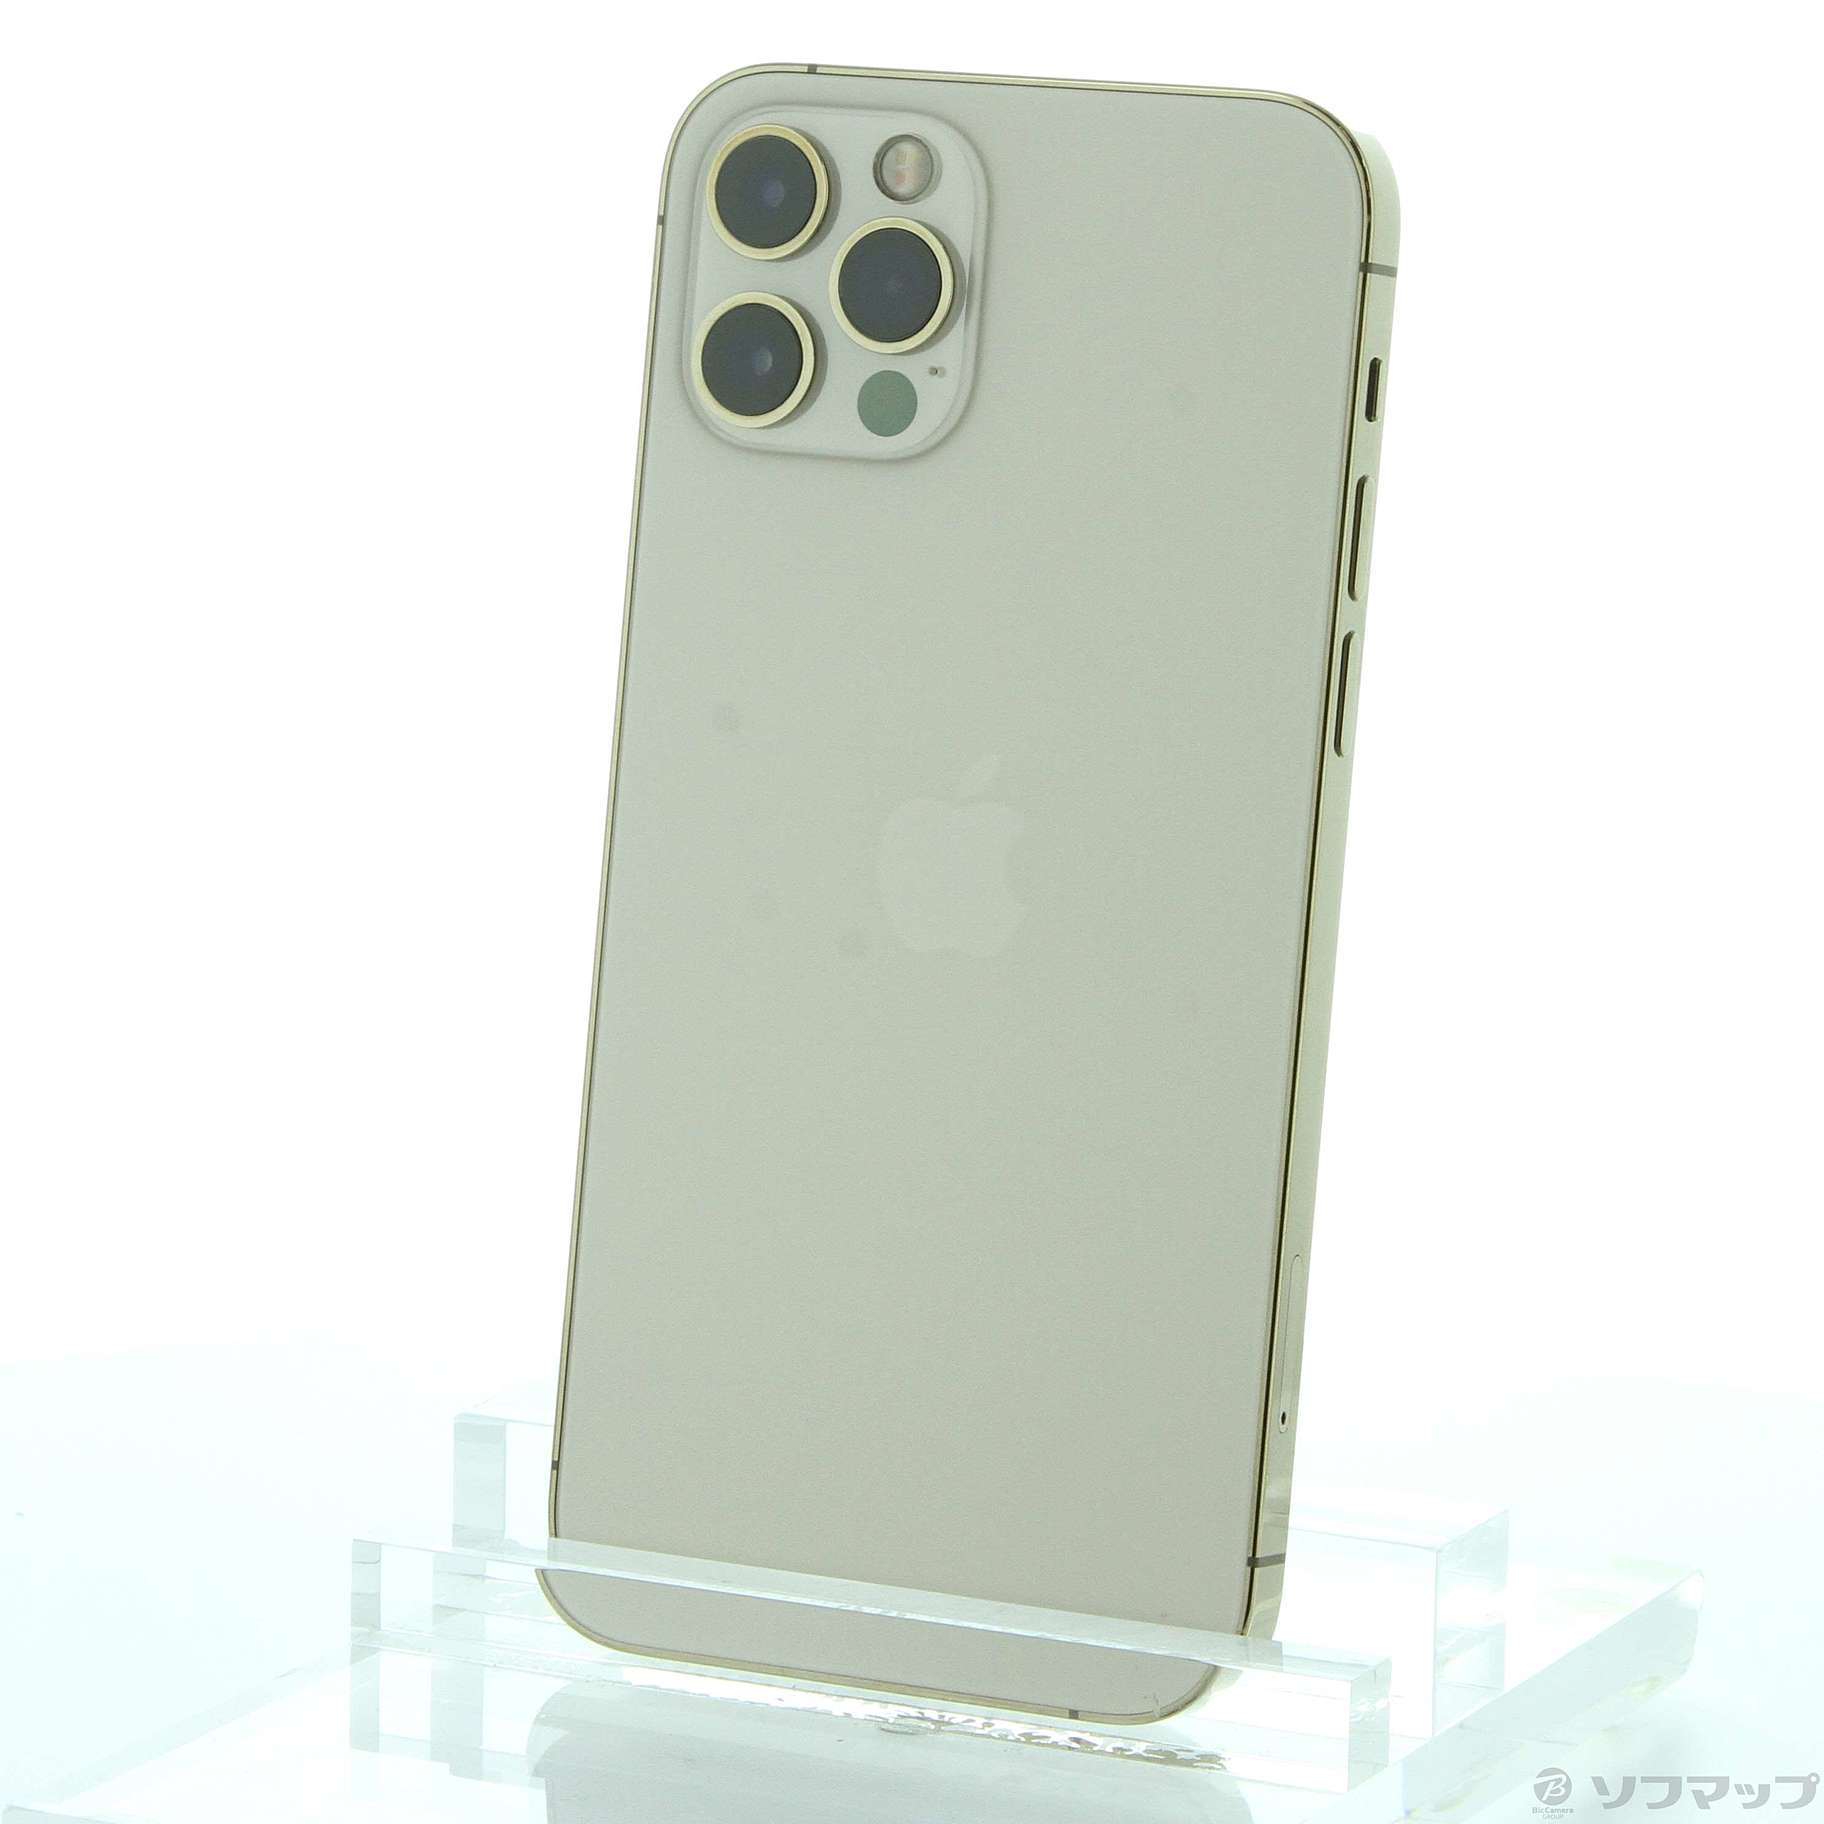 iPhone 12 Pro 128GB SIMフリー [ゴールド] 中古(白ロム)価格比較